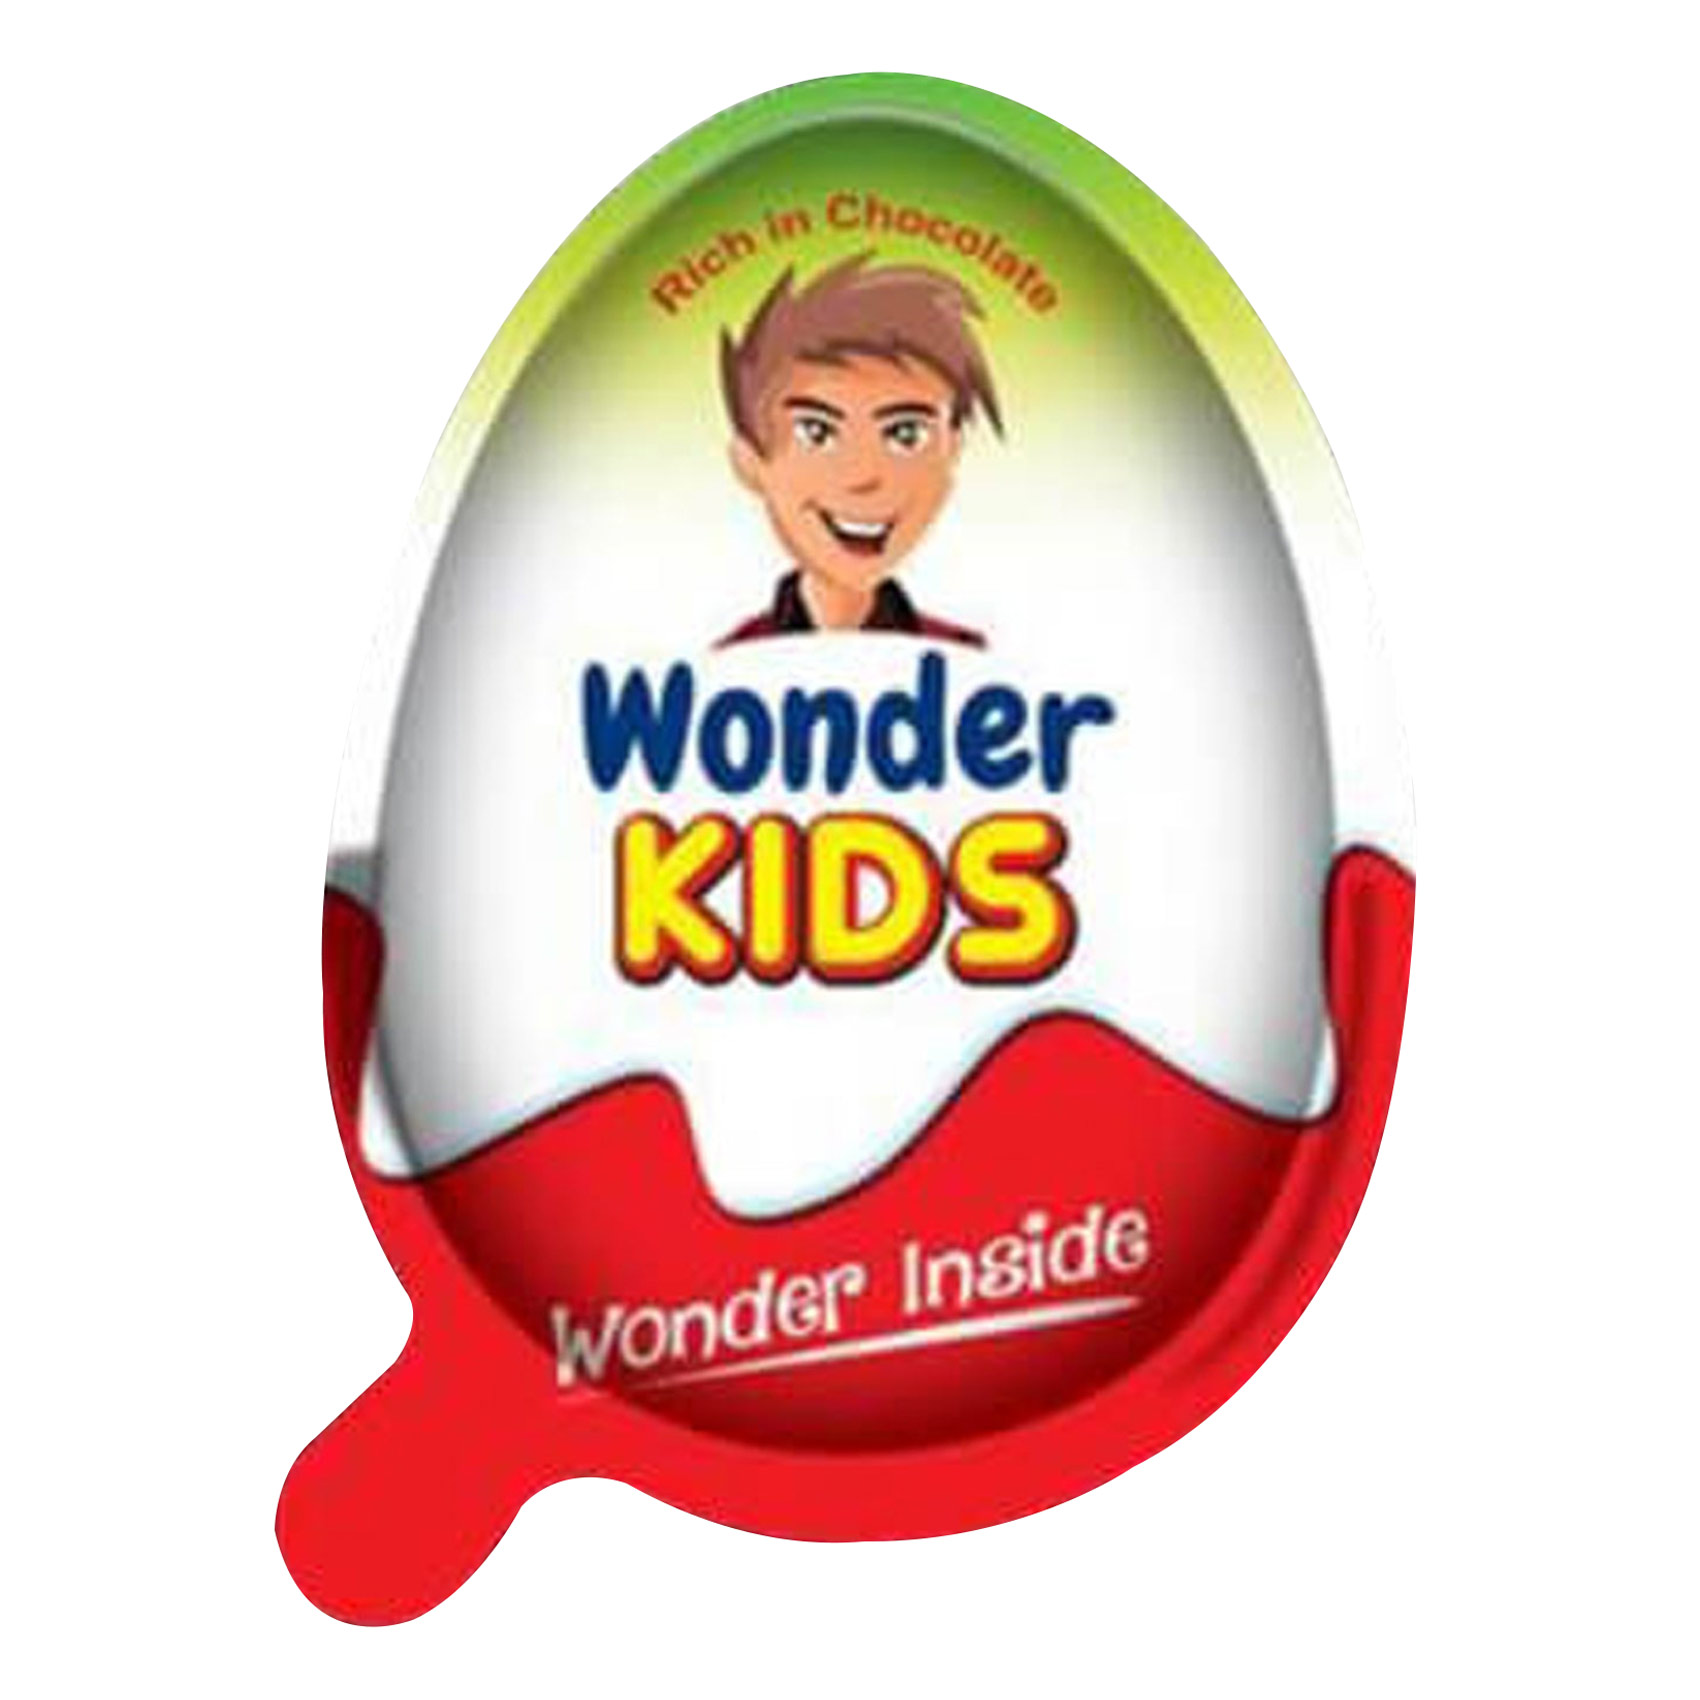 Wonder Kids Chocolate 20g